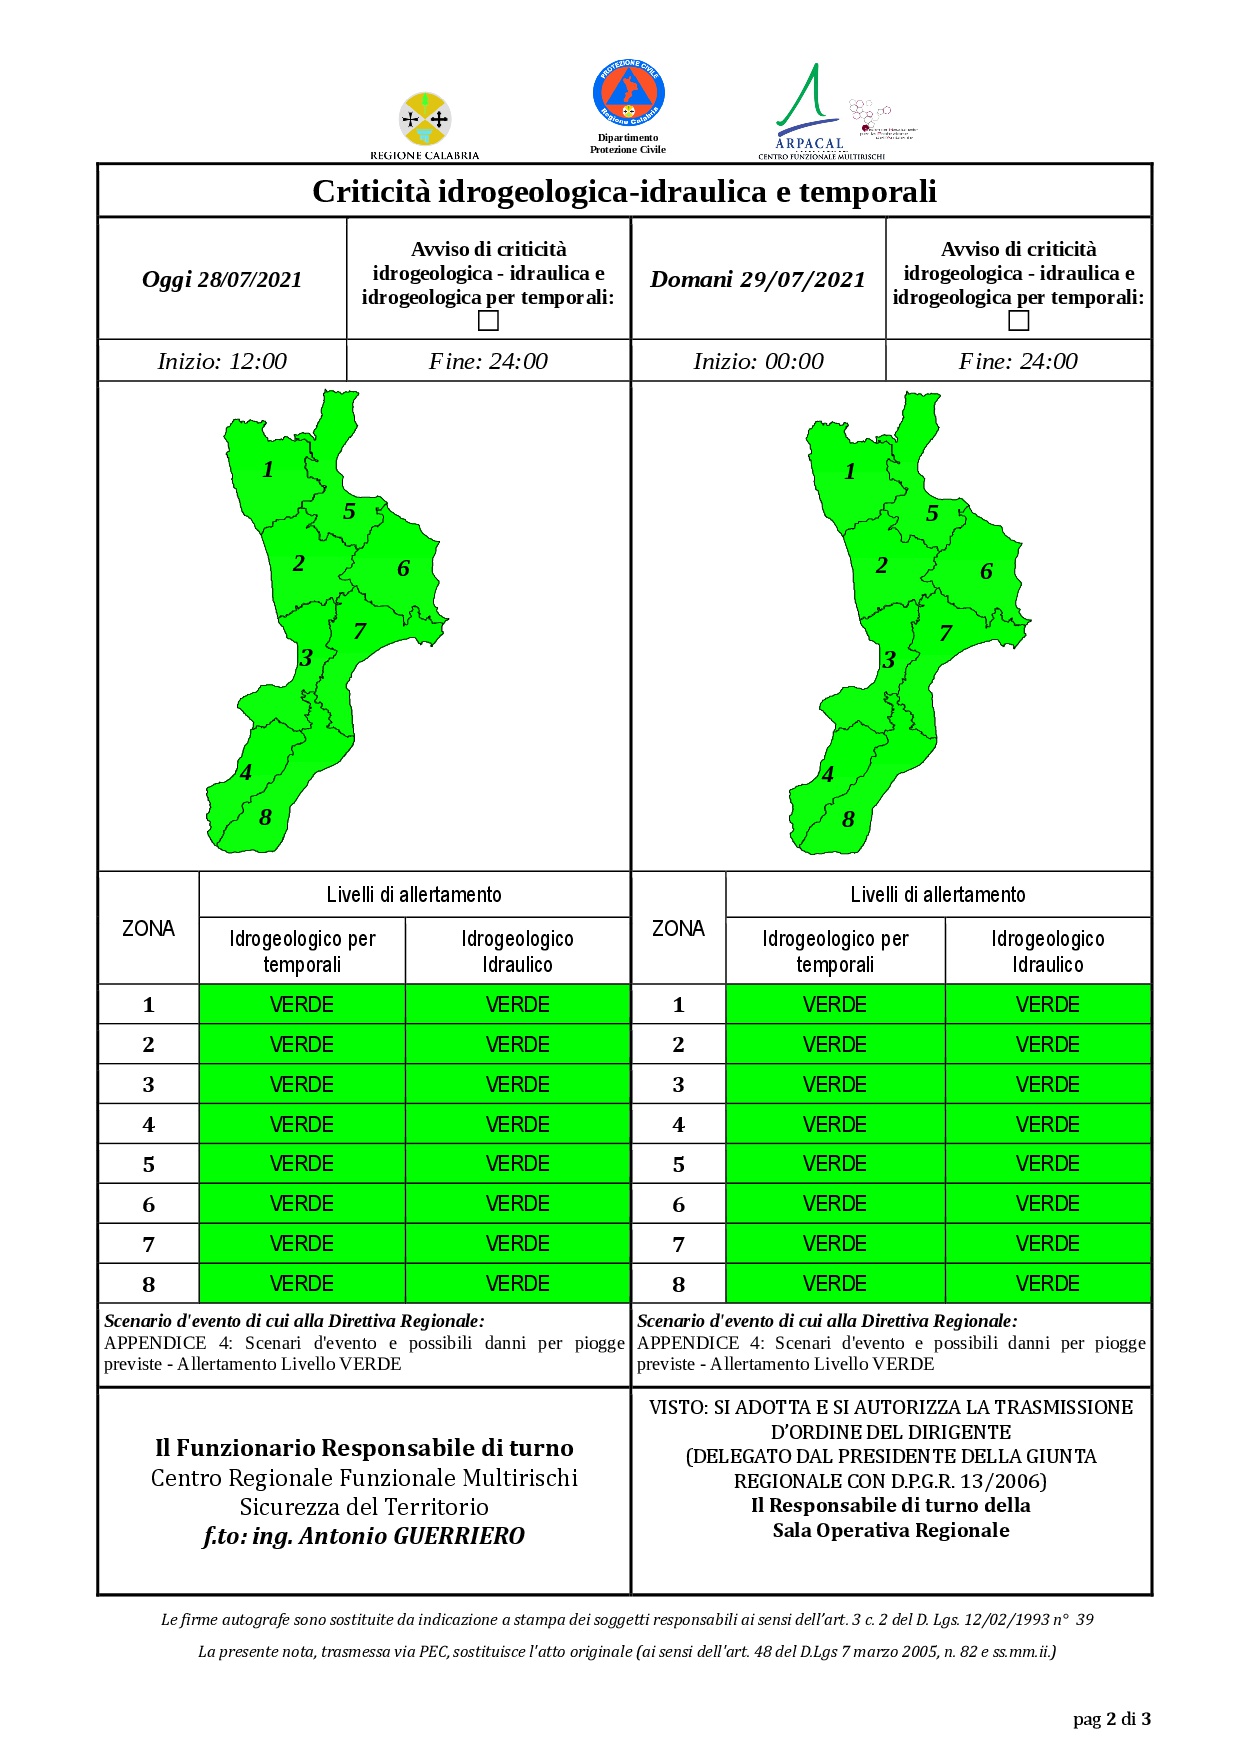 Criticità idrogeologica-idraulica e temporali in Calabria 28-07-2021